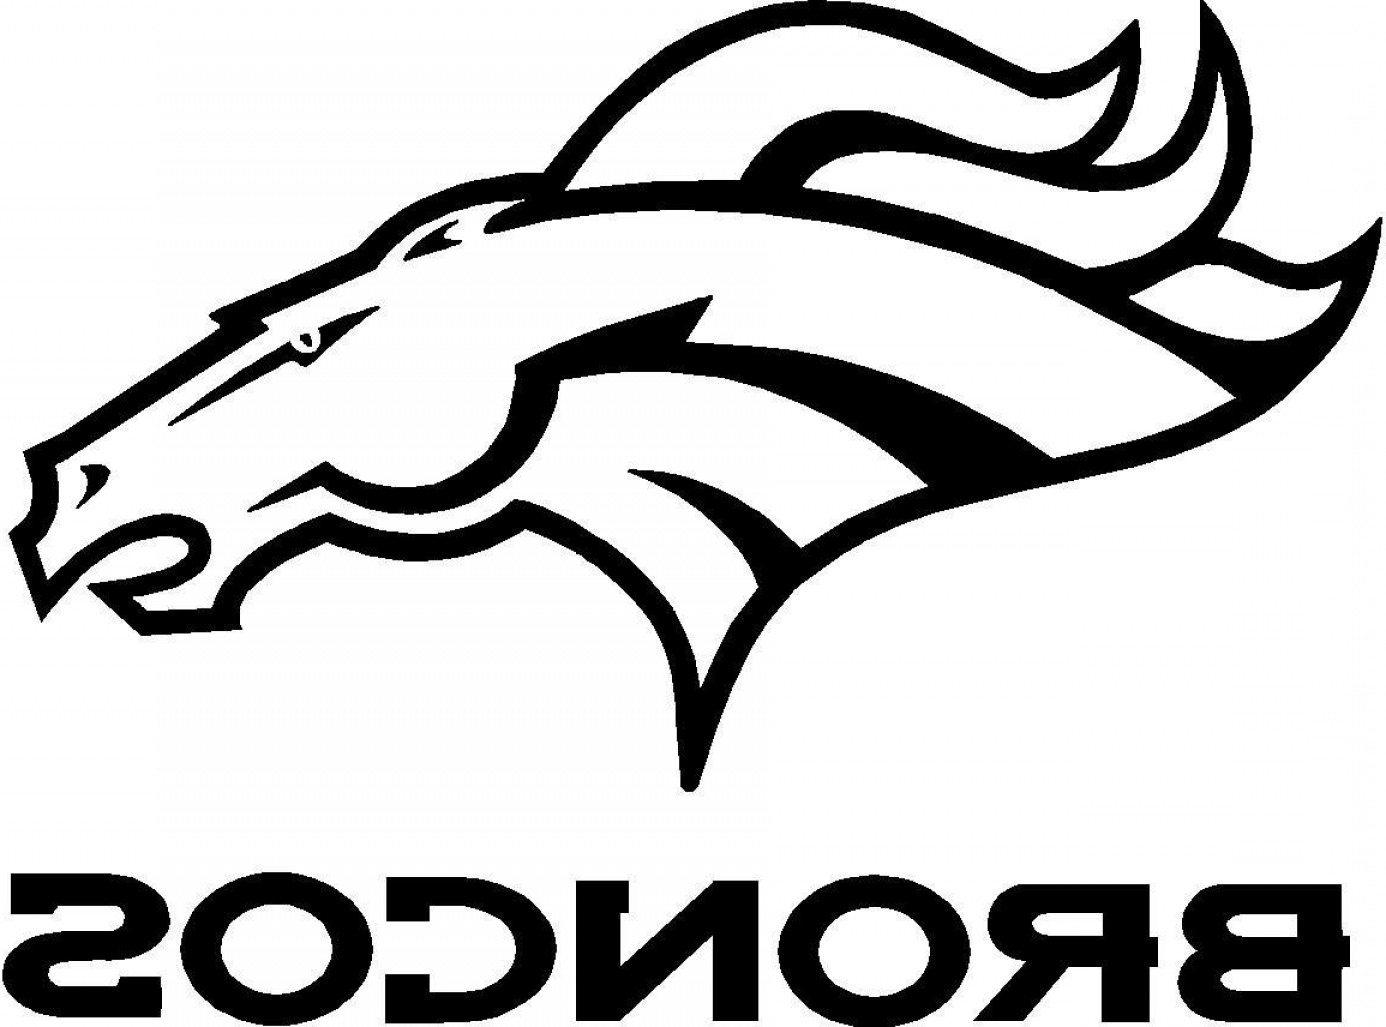 Denver Broncos Nfl Logo Decal For.